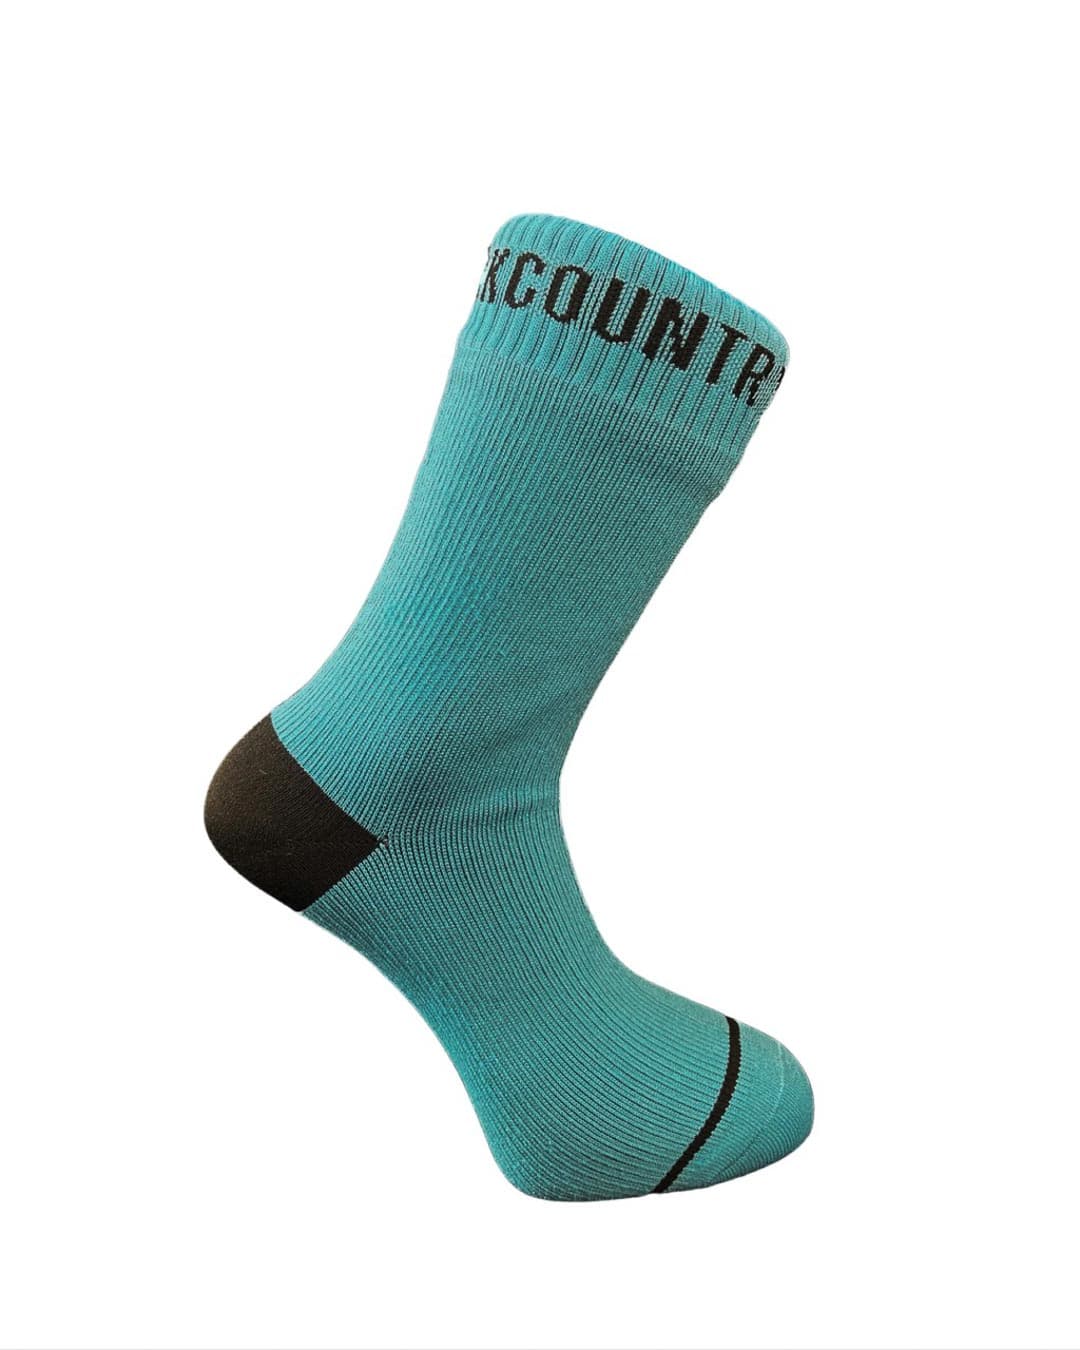 Backcountry Skinz Mid Length Waterproof Socks - Dark Aqua